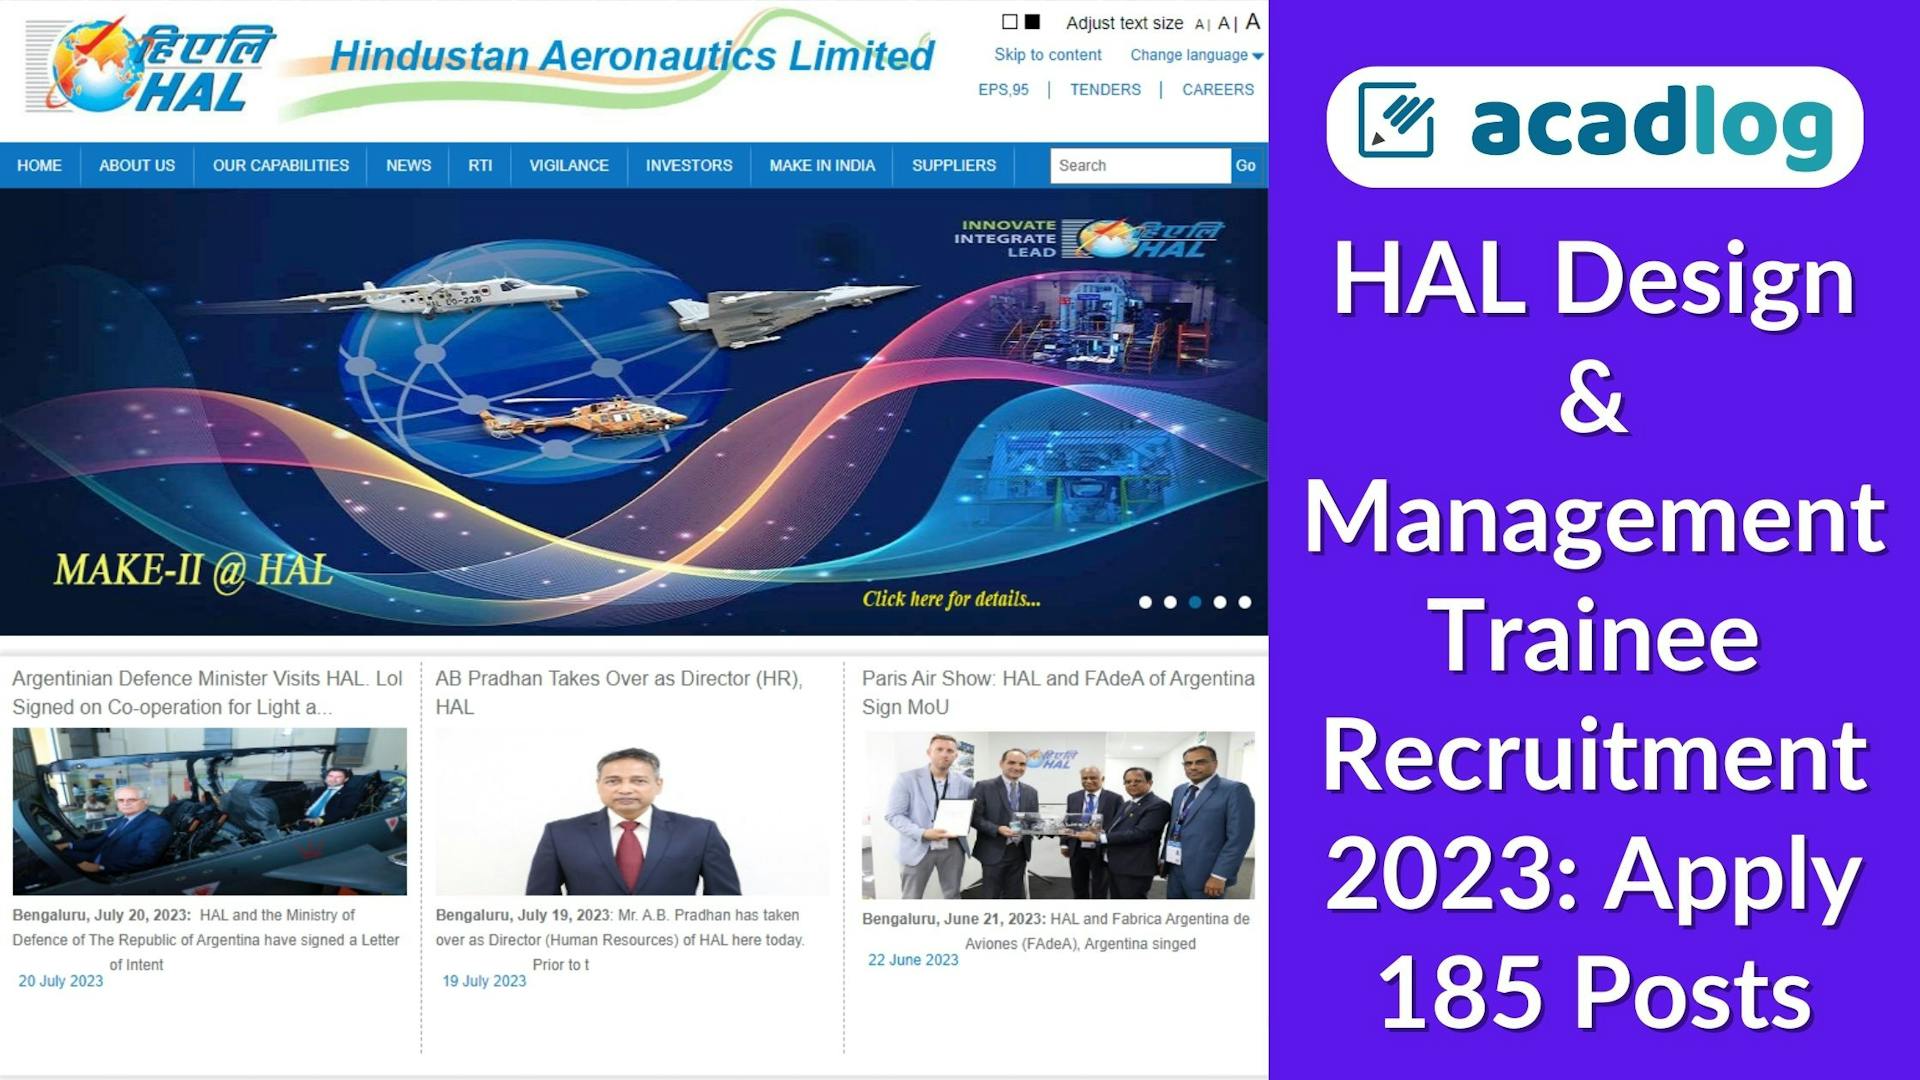 HAL Design & Management Trainee Recruitment 2023: Apply 185 Posts